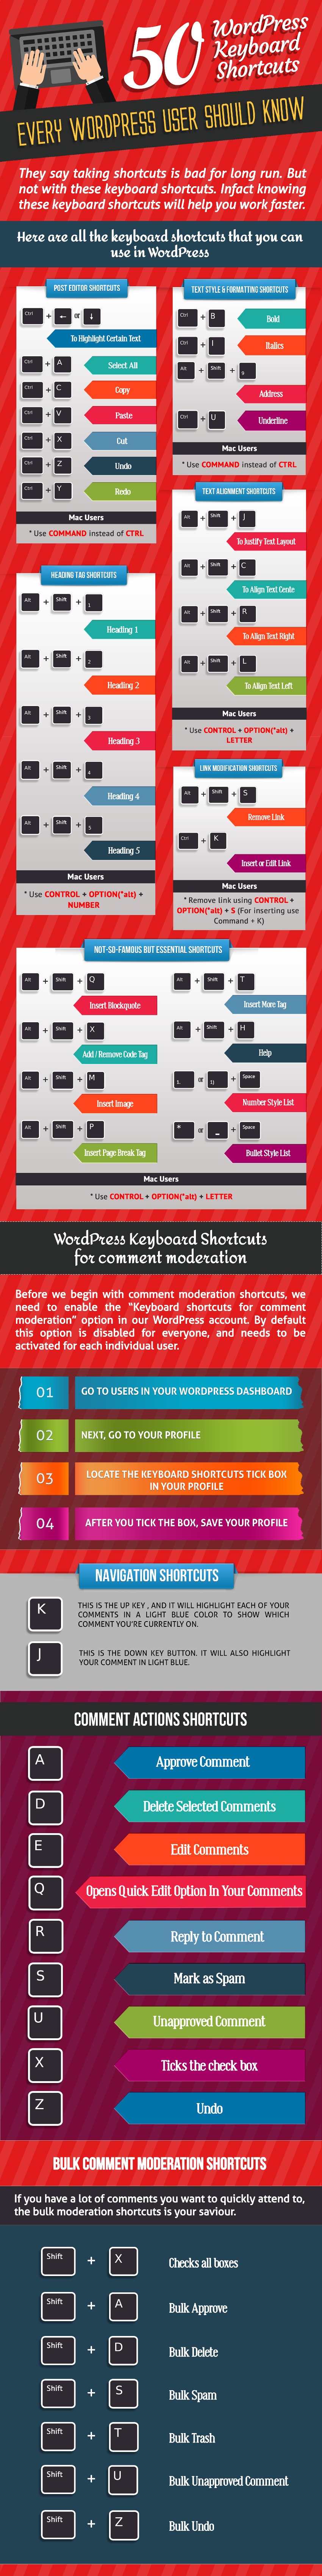 WordPress Keyboard Shortcuts Infographic